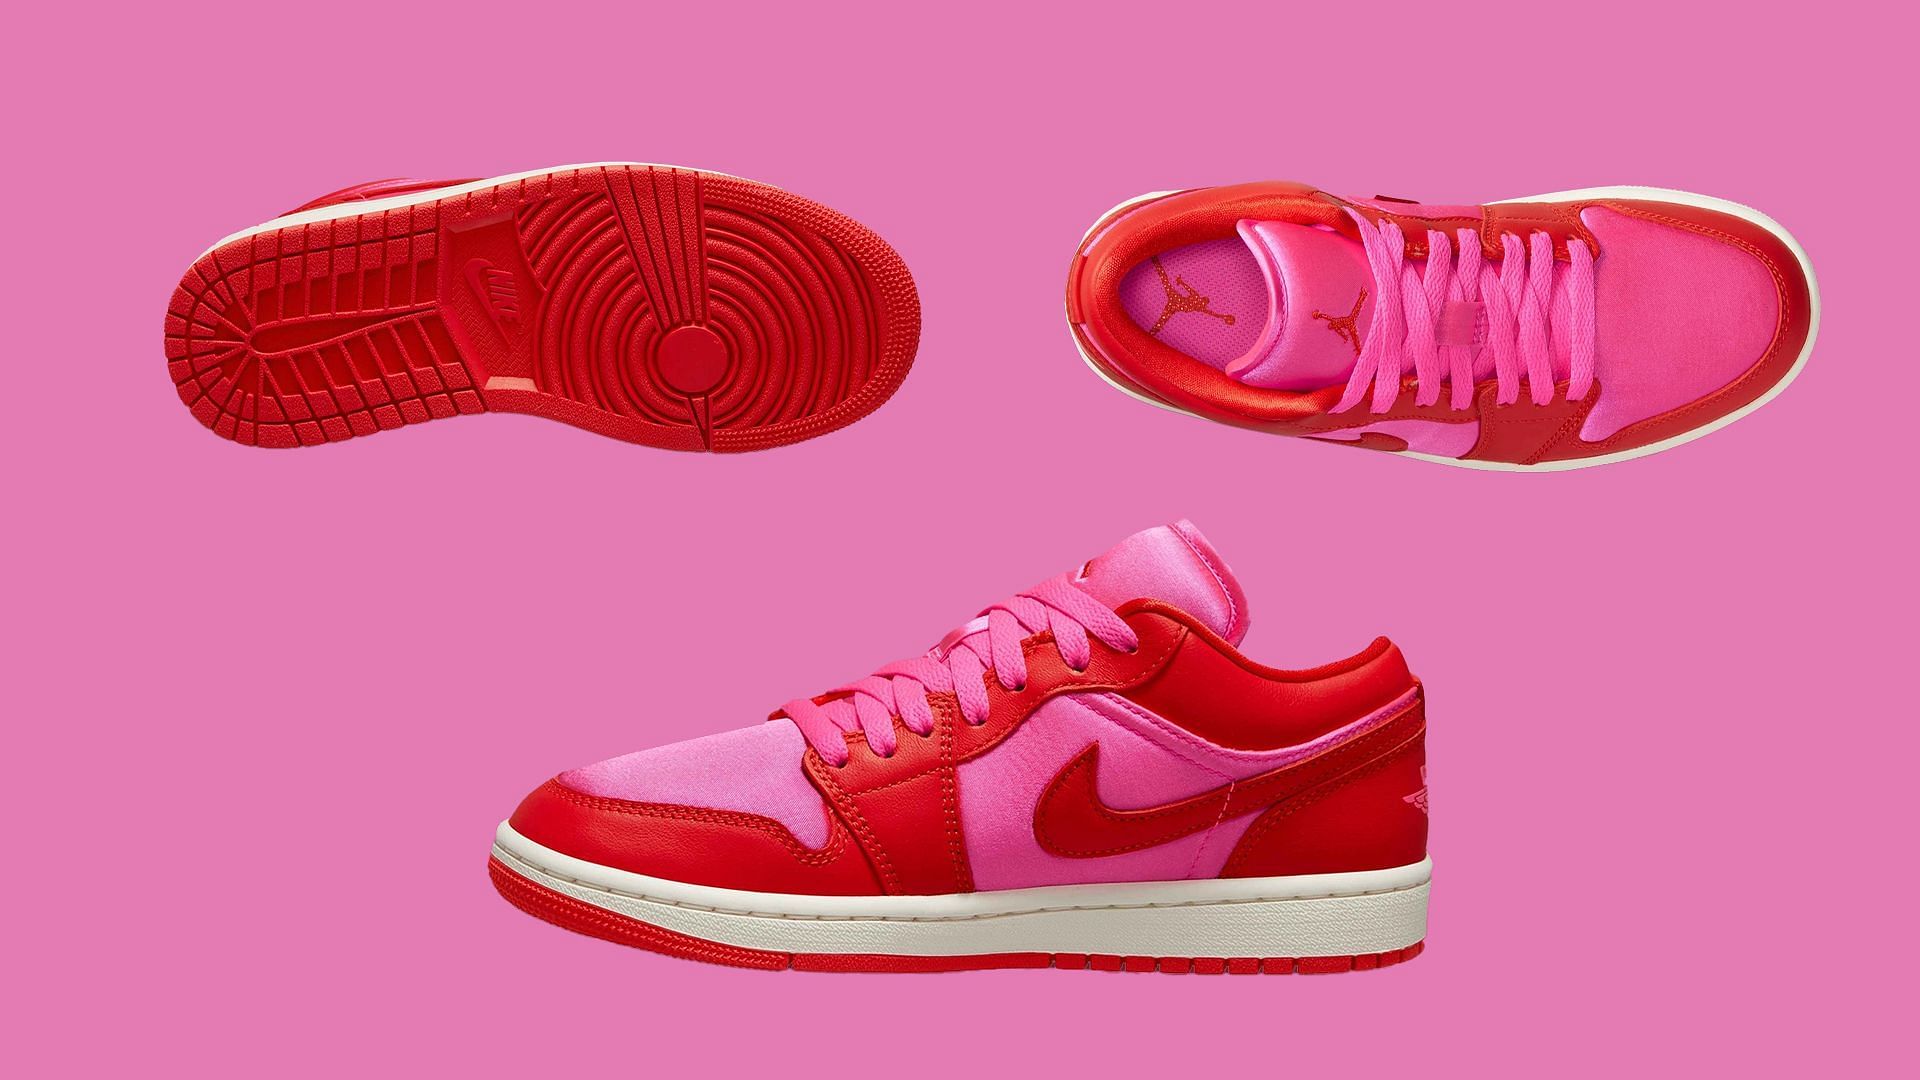 Nike Air Jordan 1 Low "Pink sneakers: to get, price, and more details explored